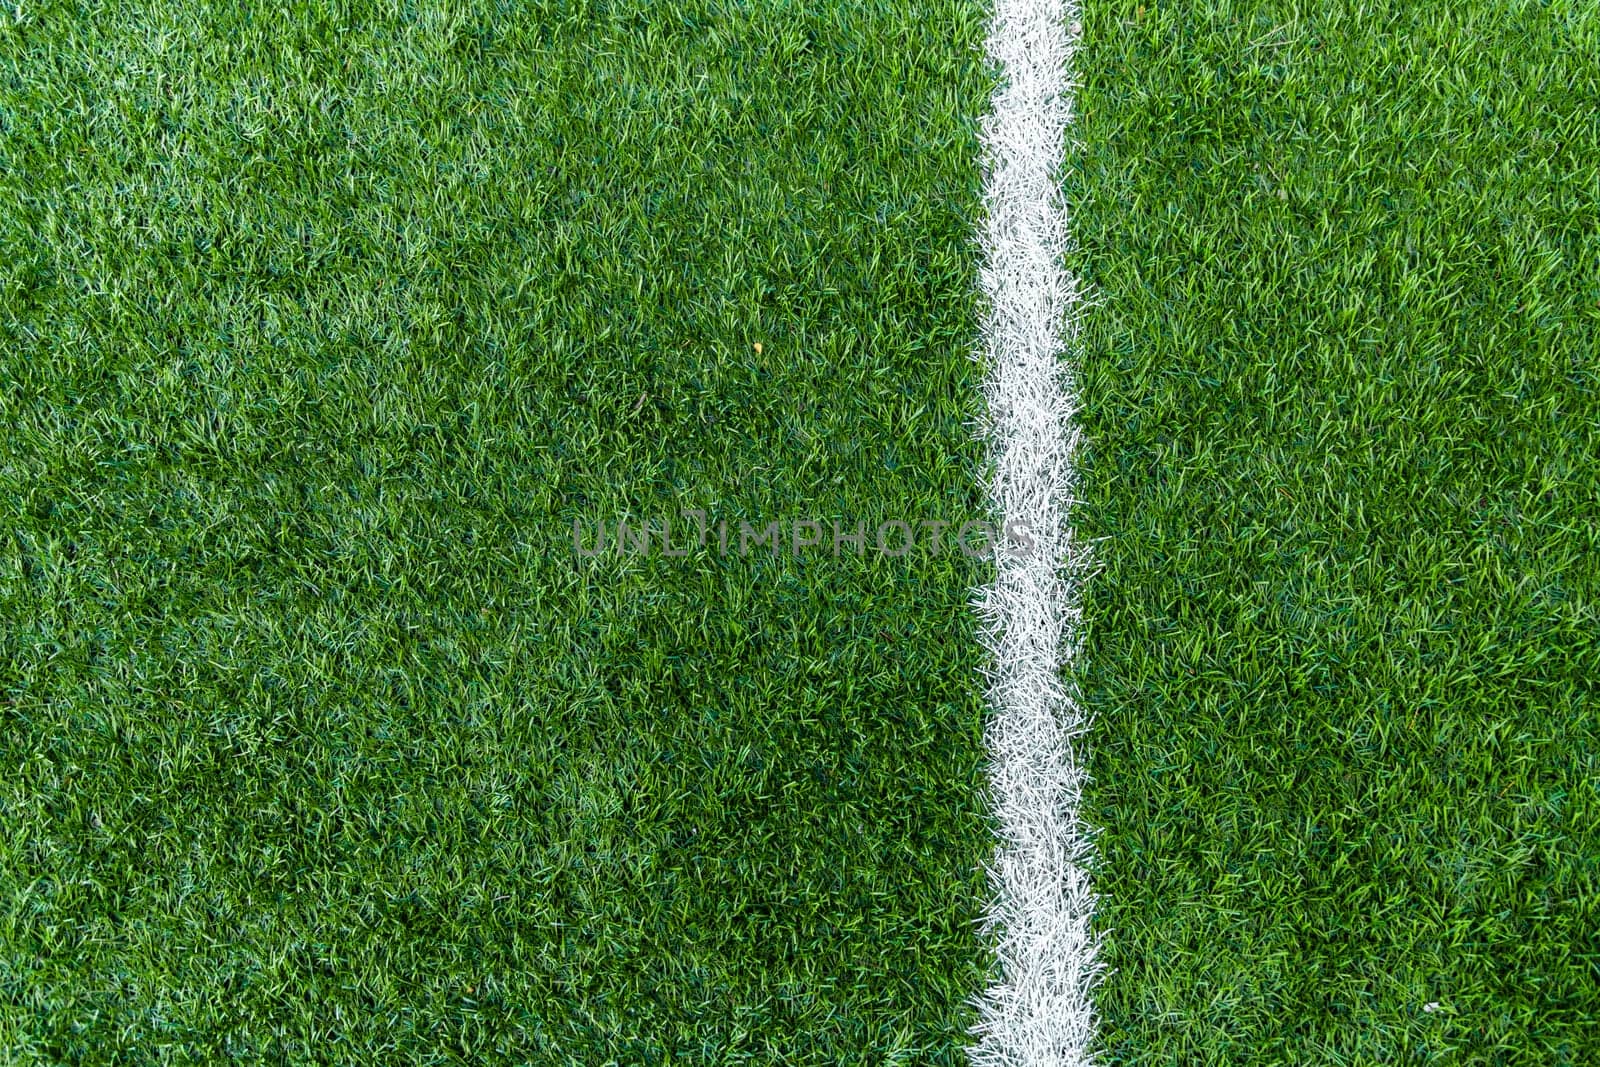 Vertical white stripe markings on the green grass of the football field by Rom4ek